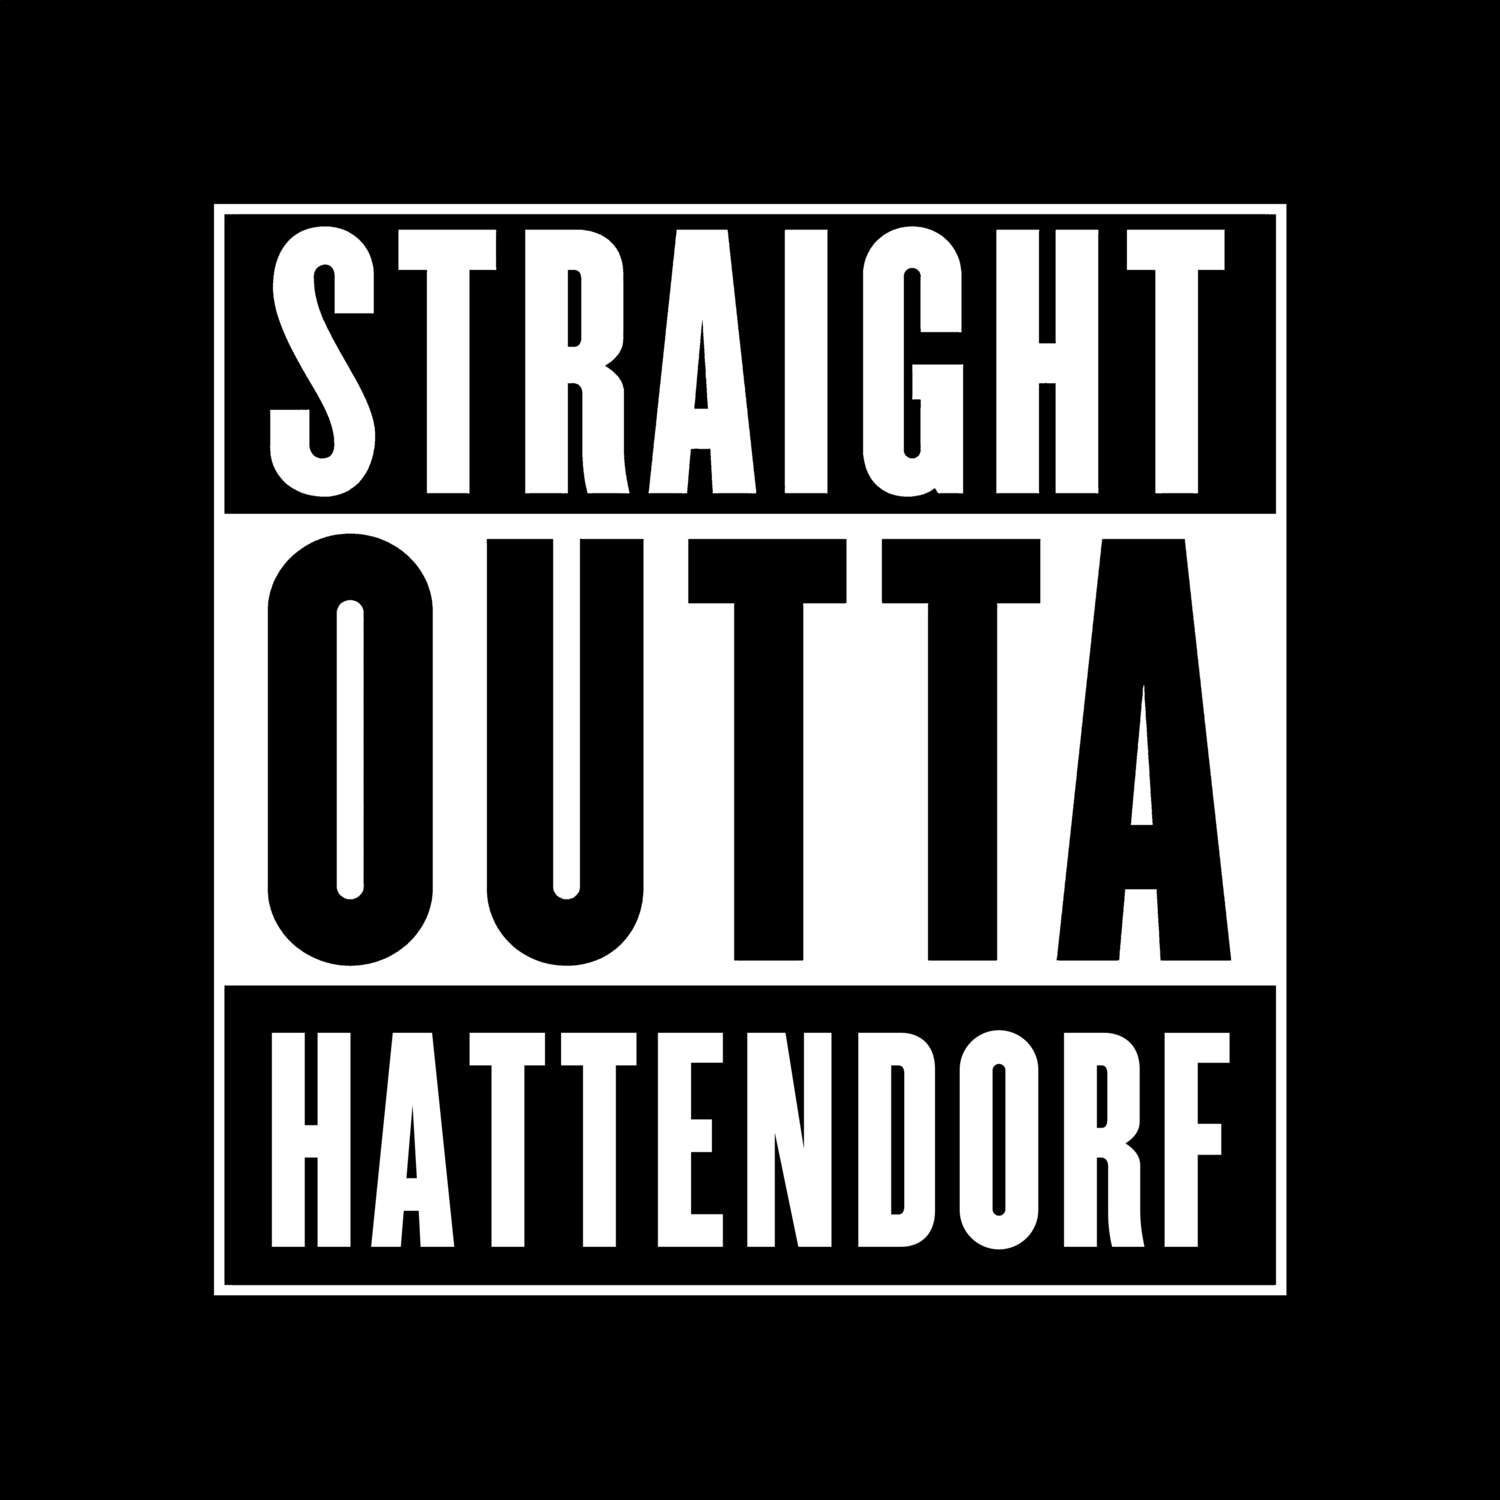 Hattendorf T-Shirt »Straight Outta«